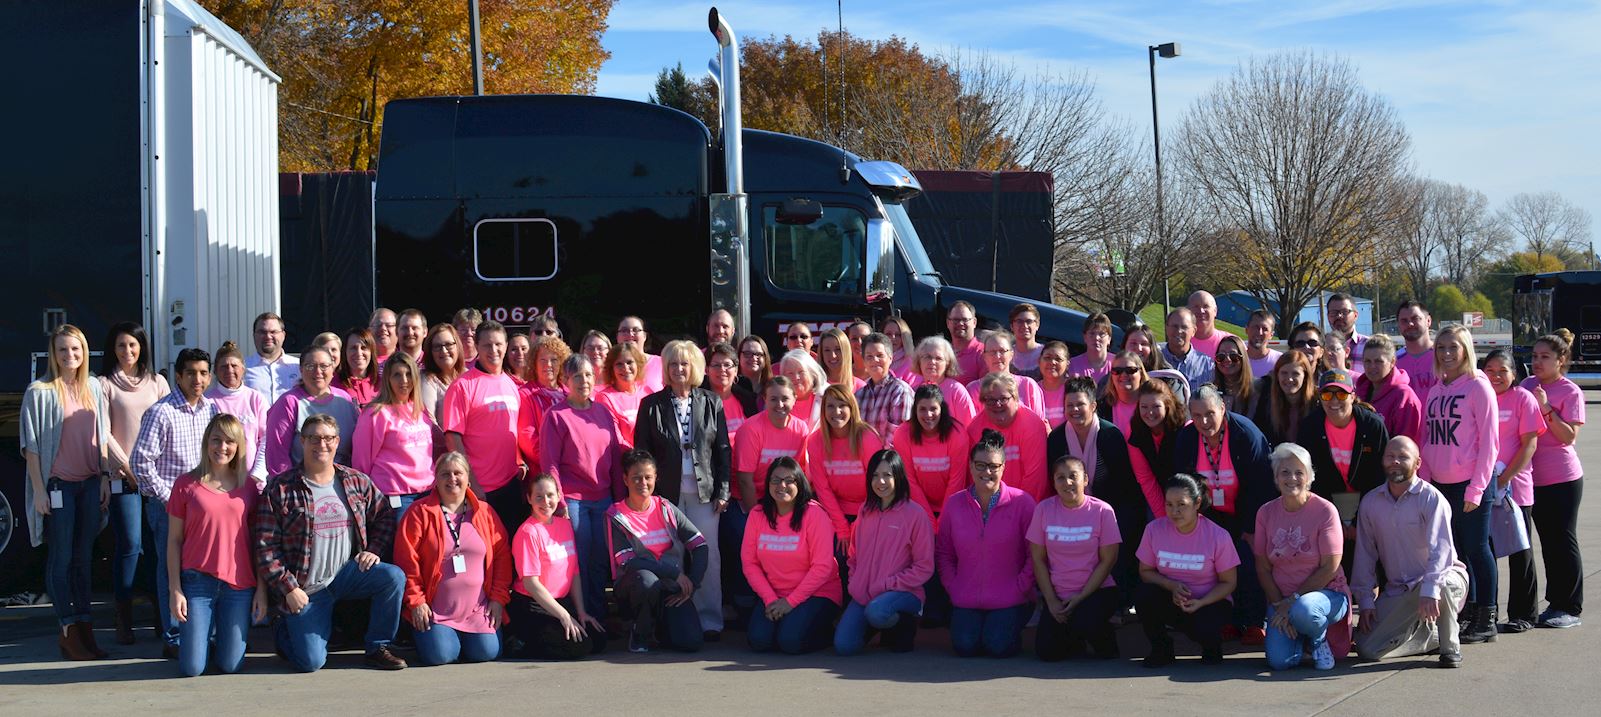 Des Moines Pink Friday TMC Transportation Employee Logistics Transportation 